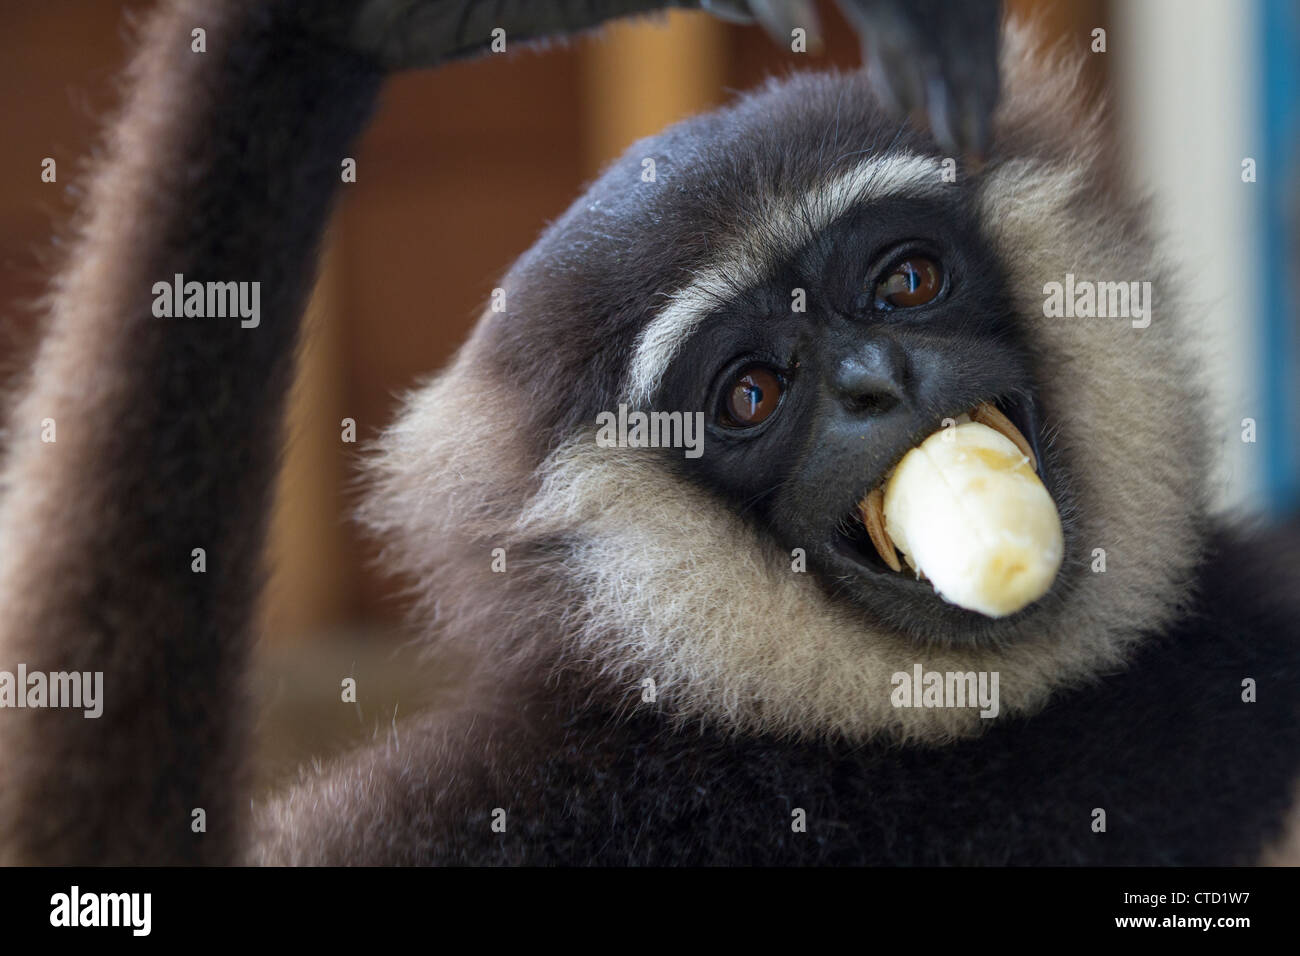 Agile Gibbon (Hylobates Agilis) hält eine Banane in den Mund, Camp Leaky Tanjung Puting Nationalpark, Indonesien Stockfoto